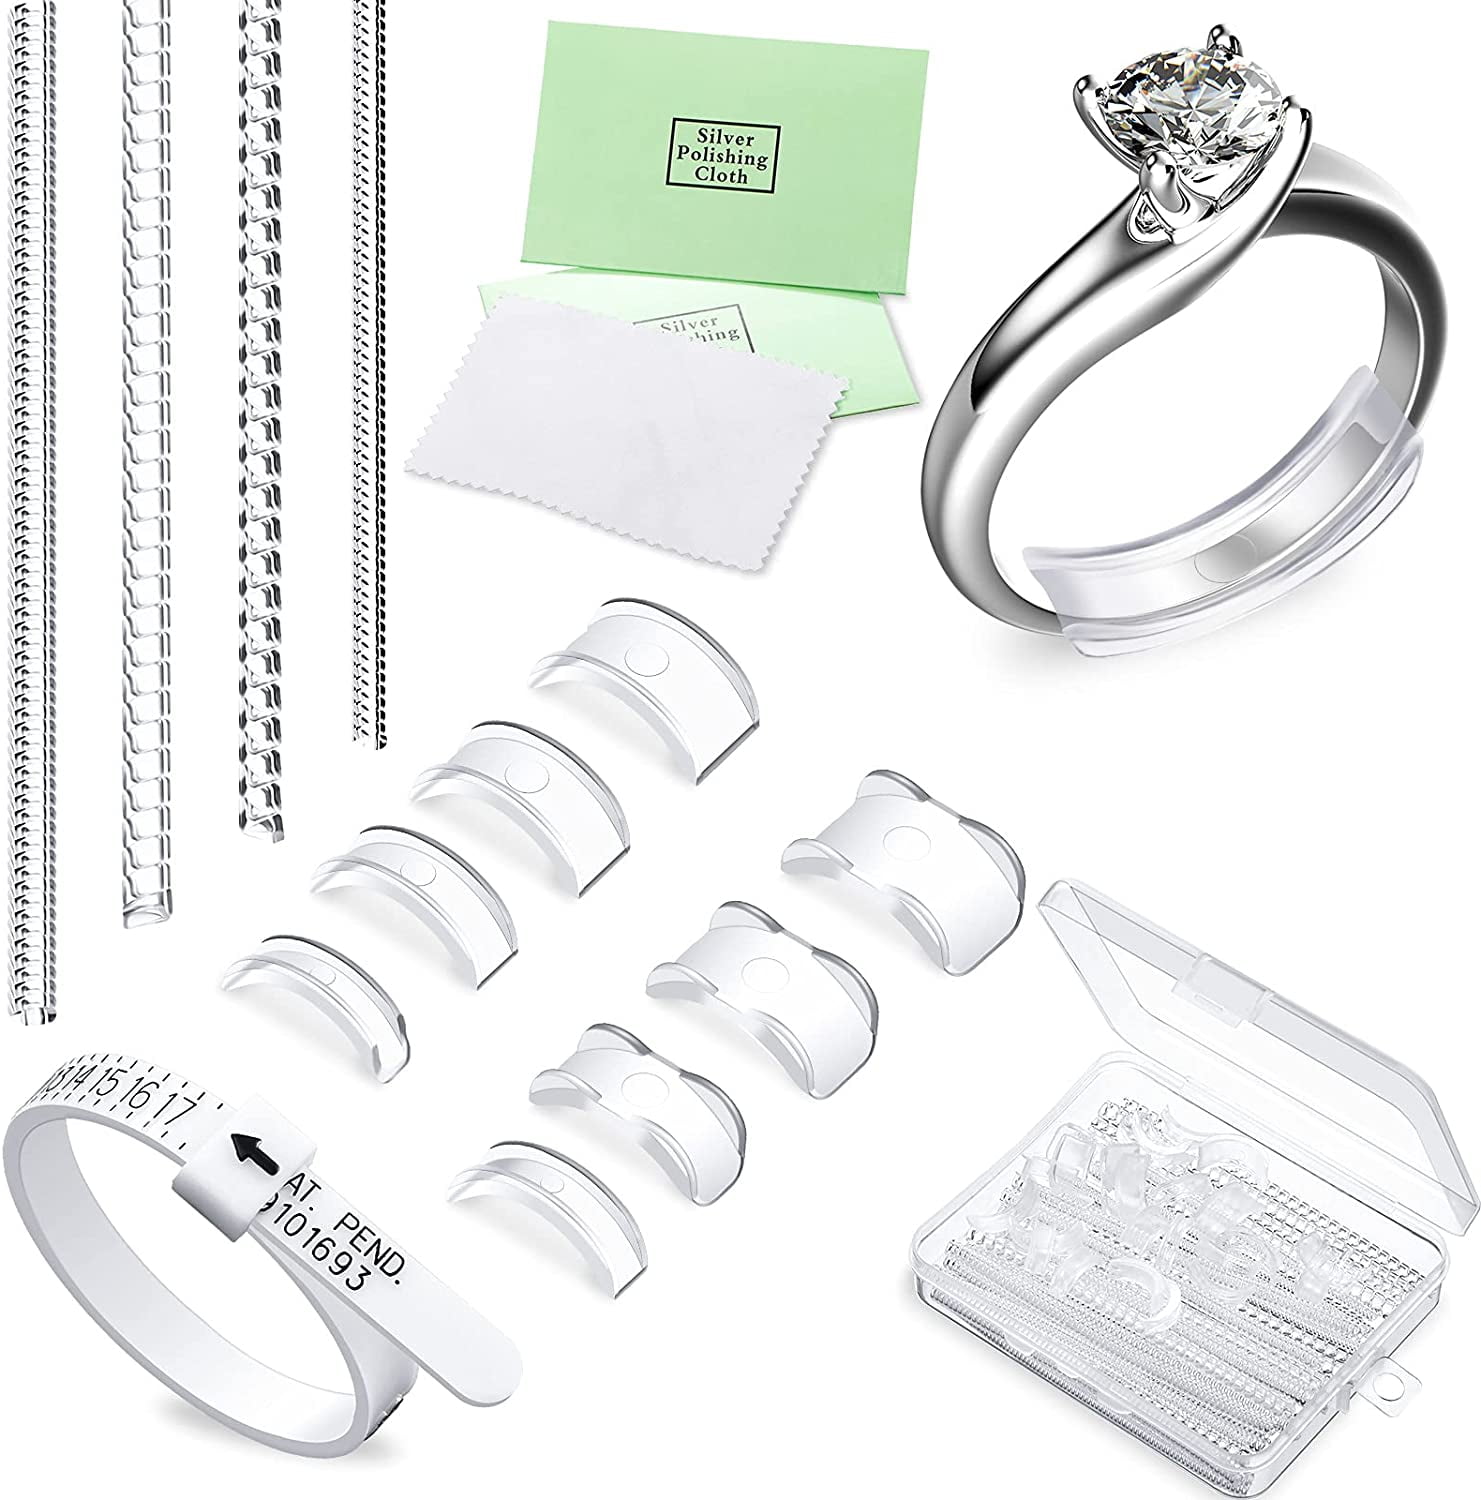 16Pcs/Set Transparent Resizer Reducer Guard to Make Jewelry